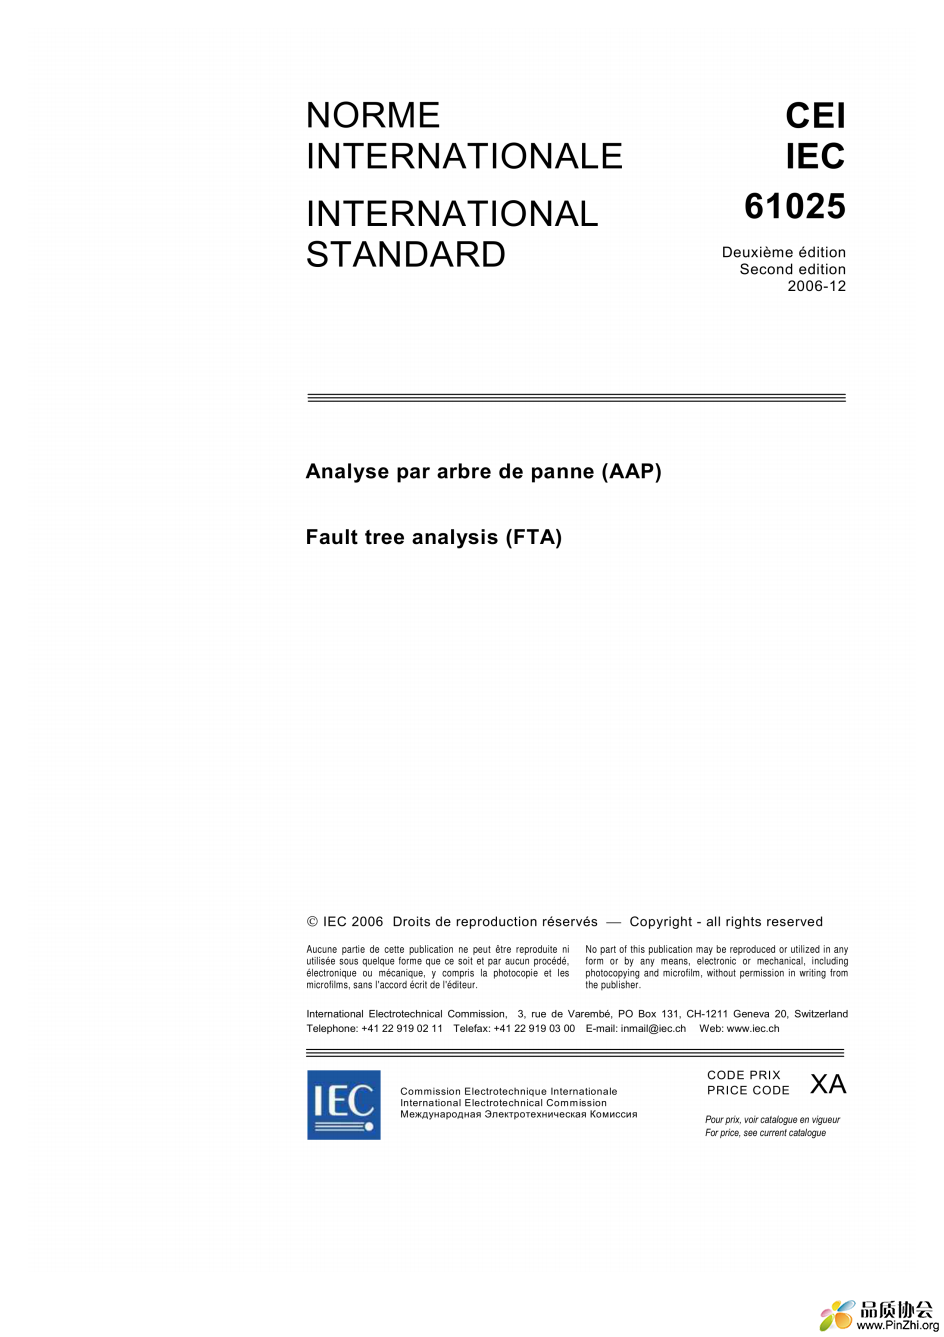 IEC-61025-2006 故障树分析 Fault tree analysis (FTA)英文版